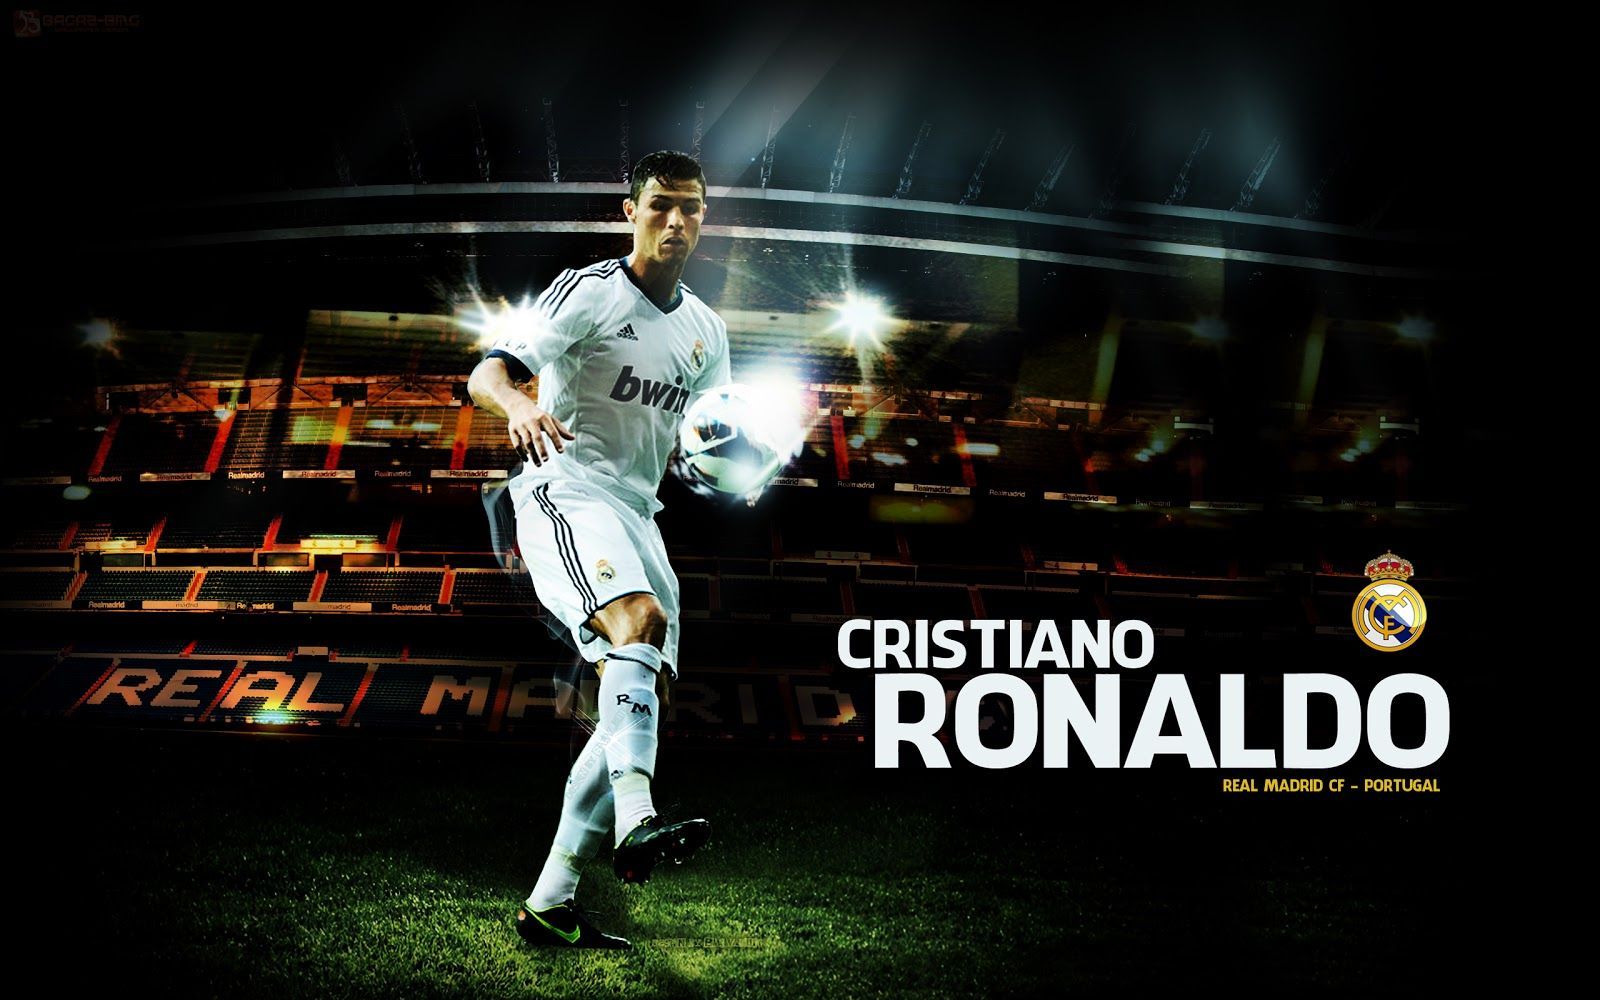 Cristiano-Ronaldo-Portugal-and-Real-Madrid-HD-Wallpaper-2013.jpg